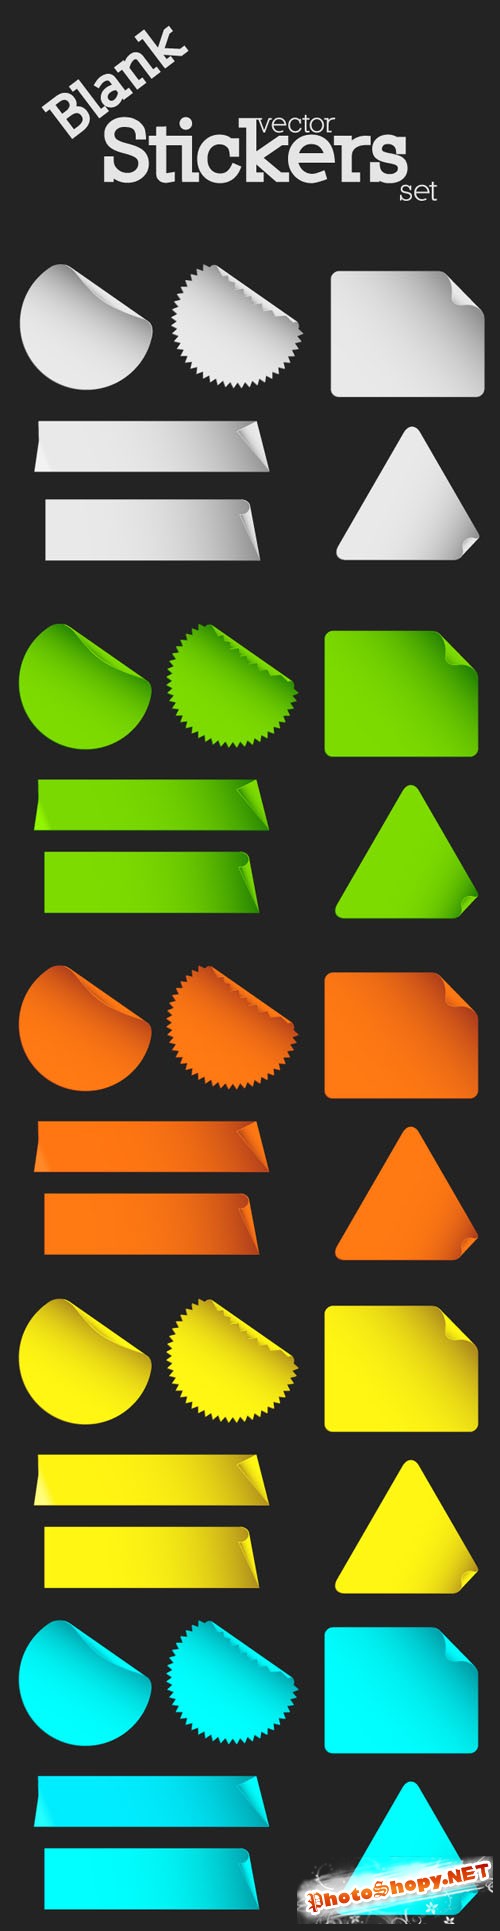 Designtnt - Blank Vector Stickers